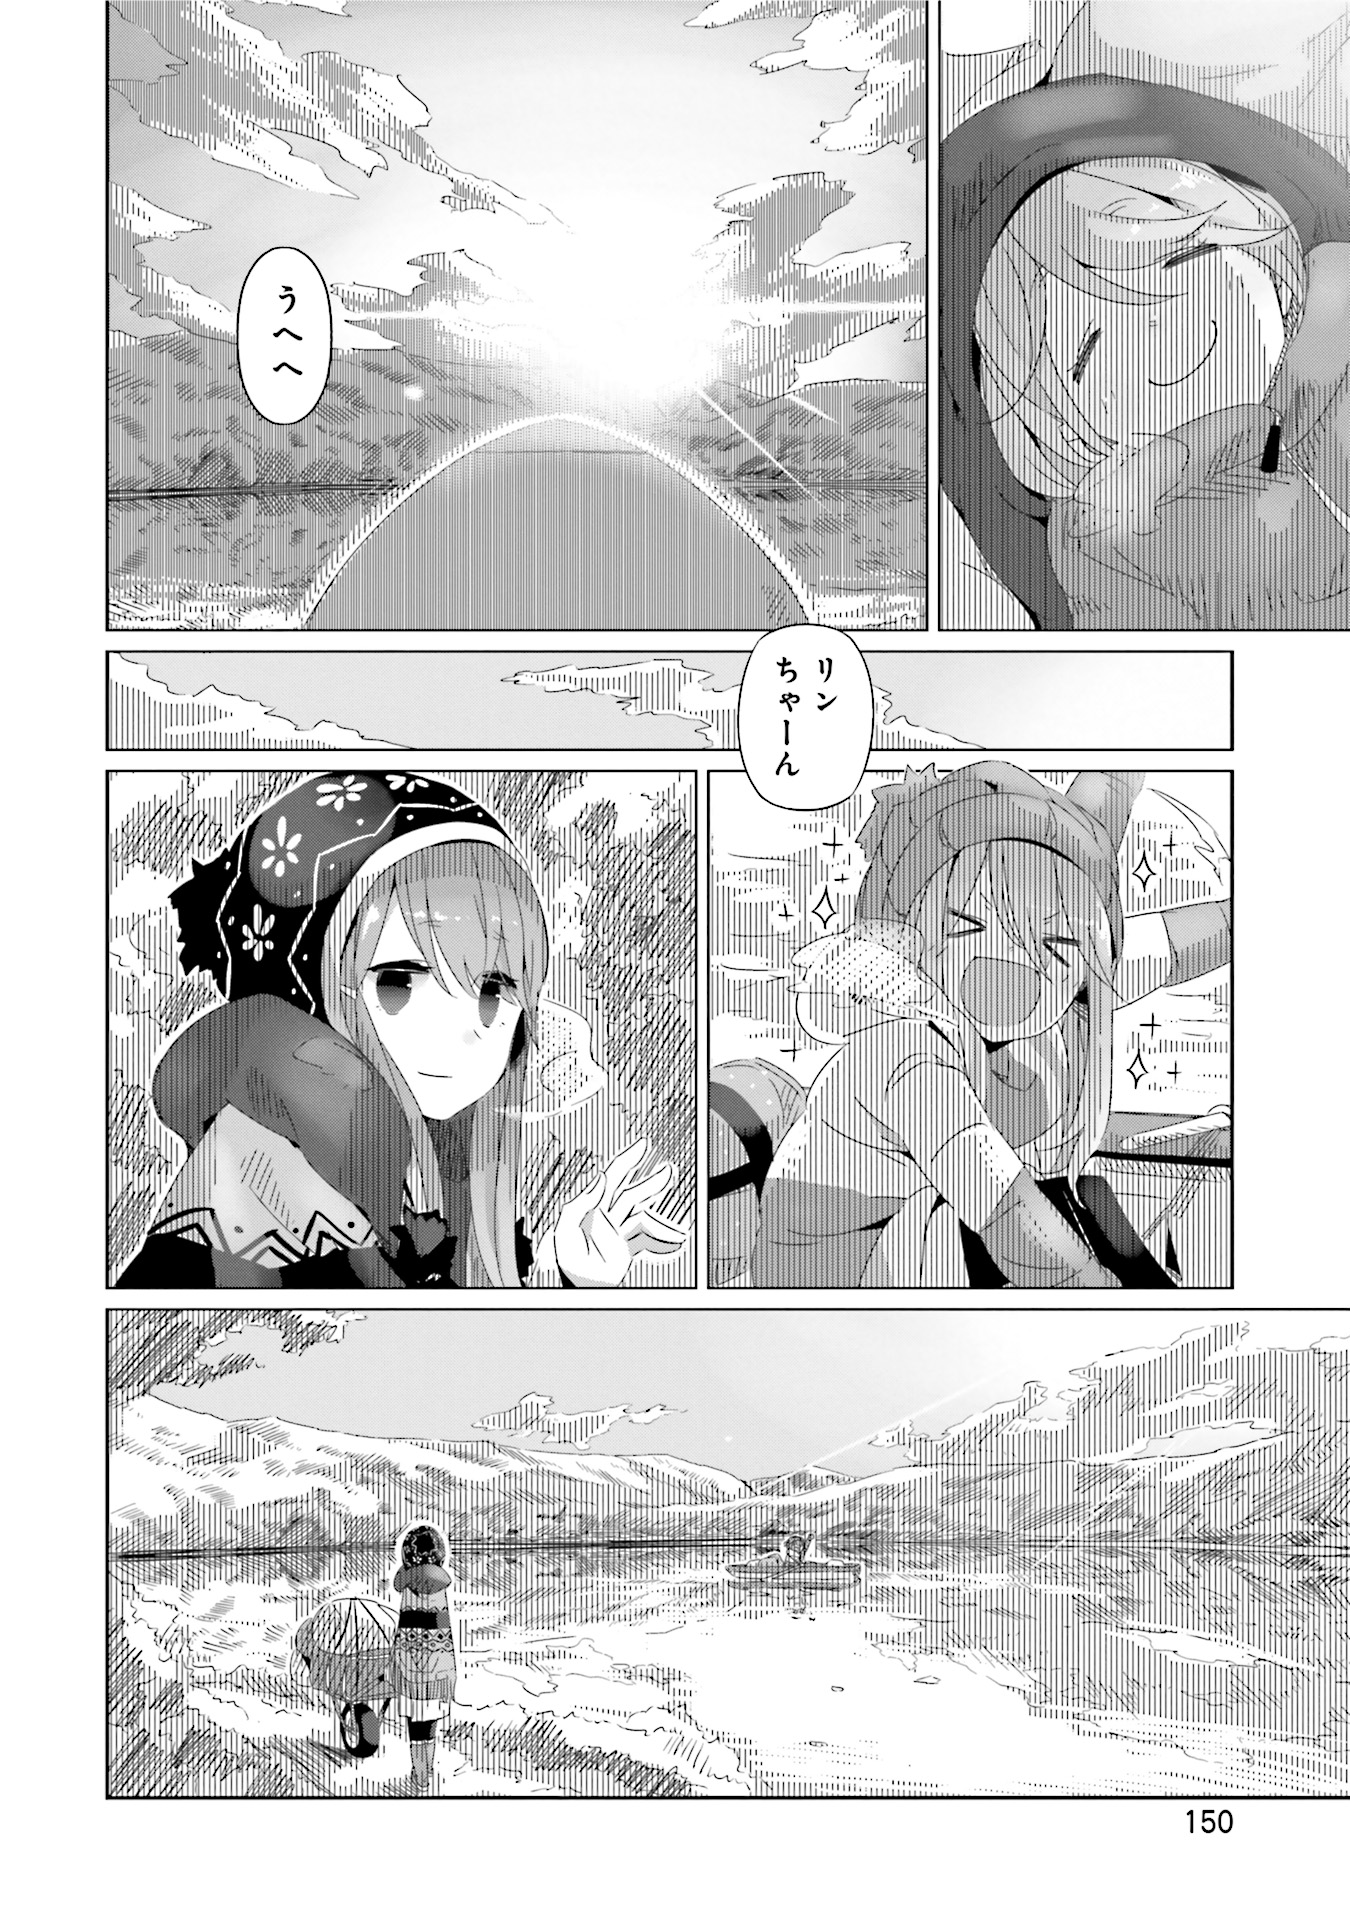 Yuru Camp - Chapter 12 - Page 25